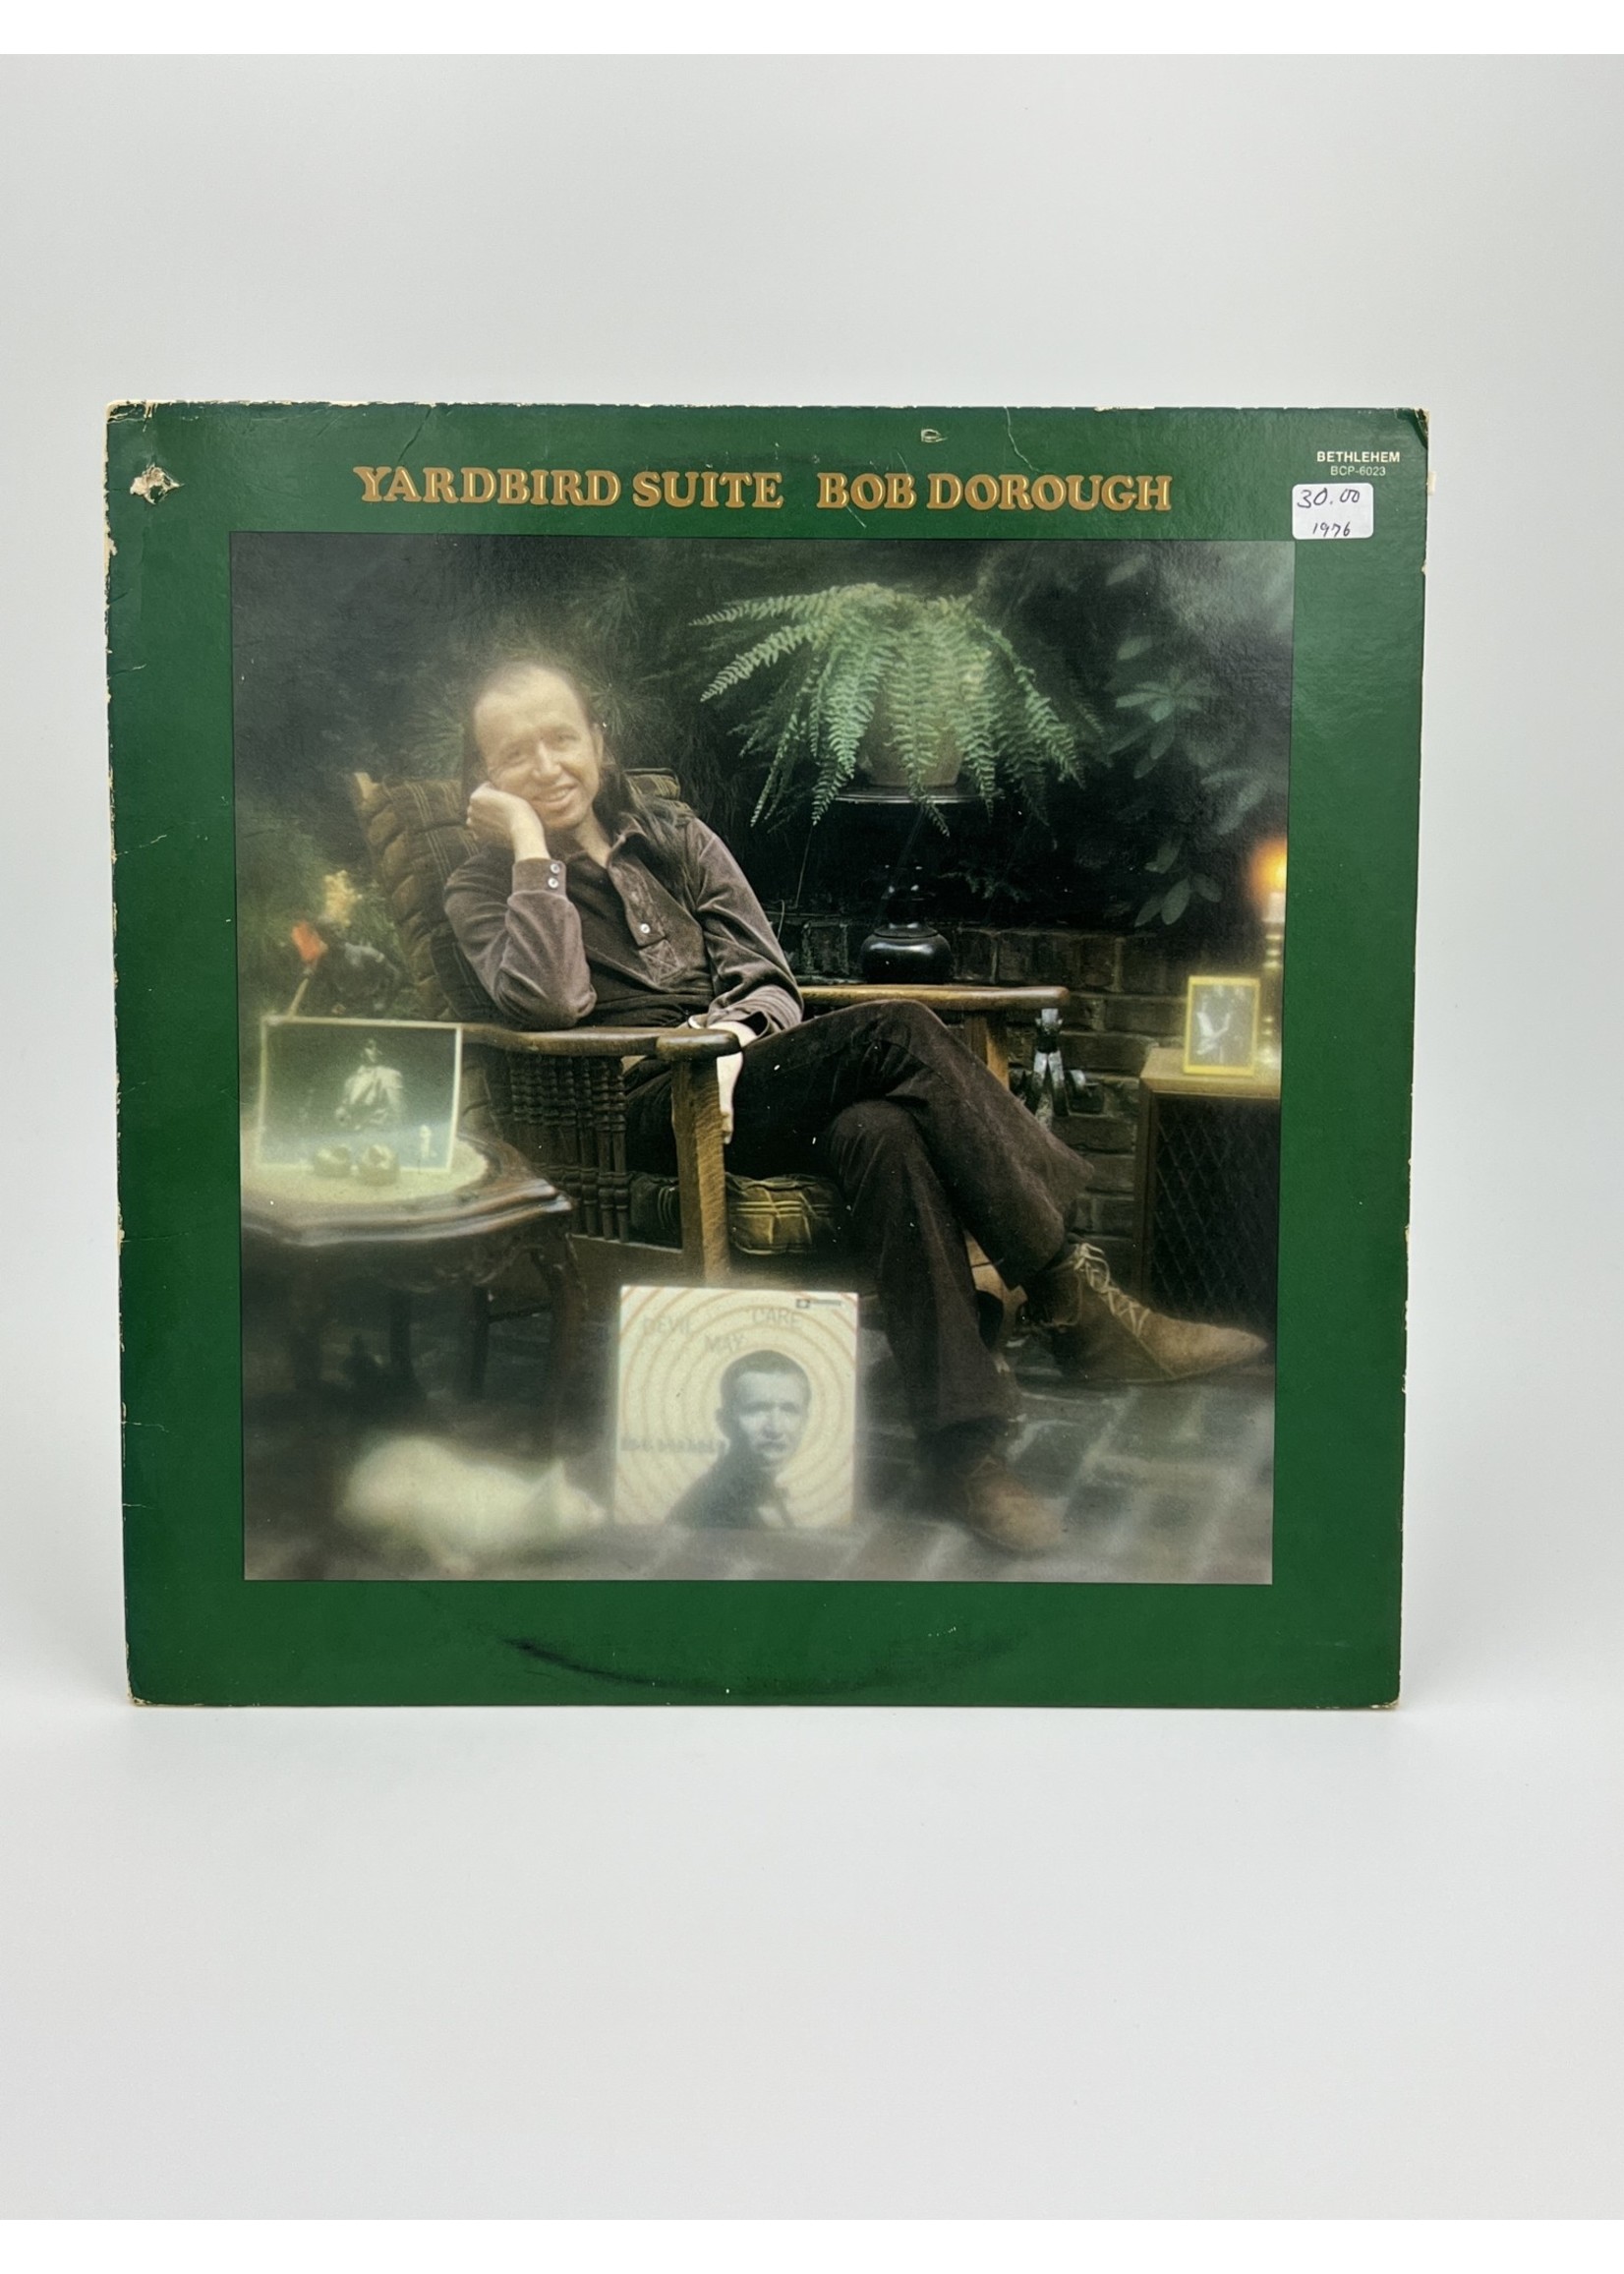 LP Bob Dorough Yardbird Suite LP Record